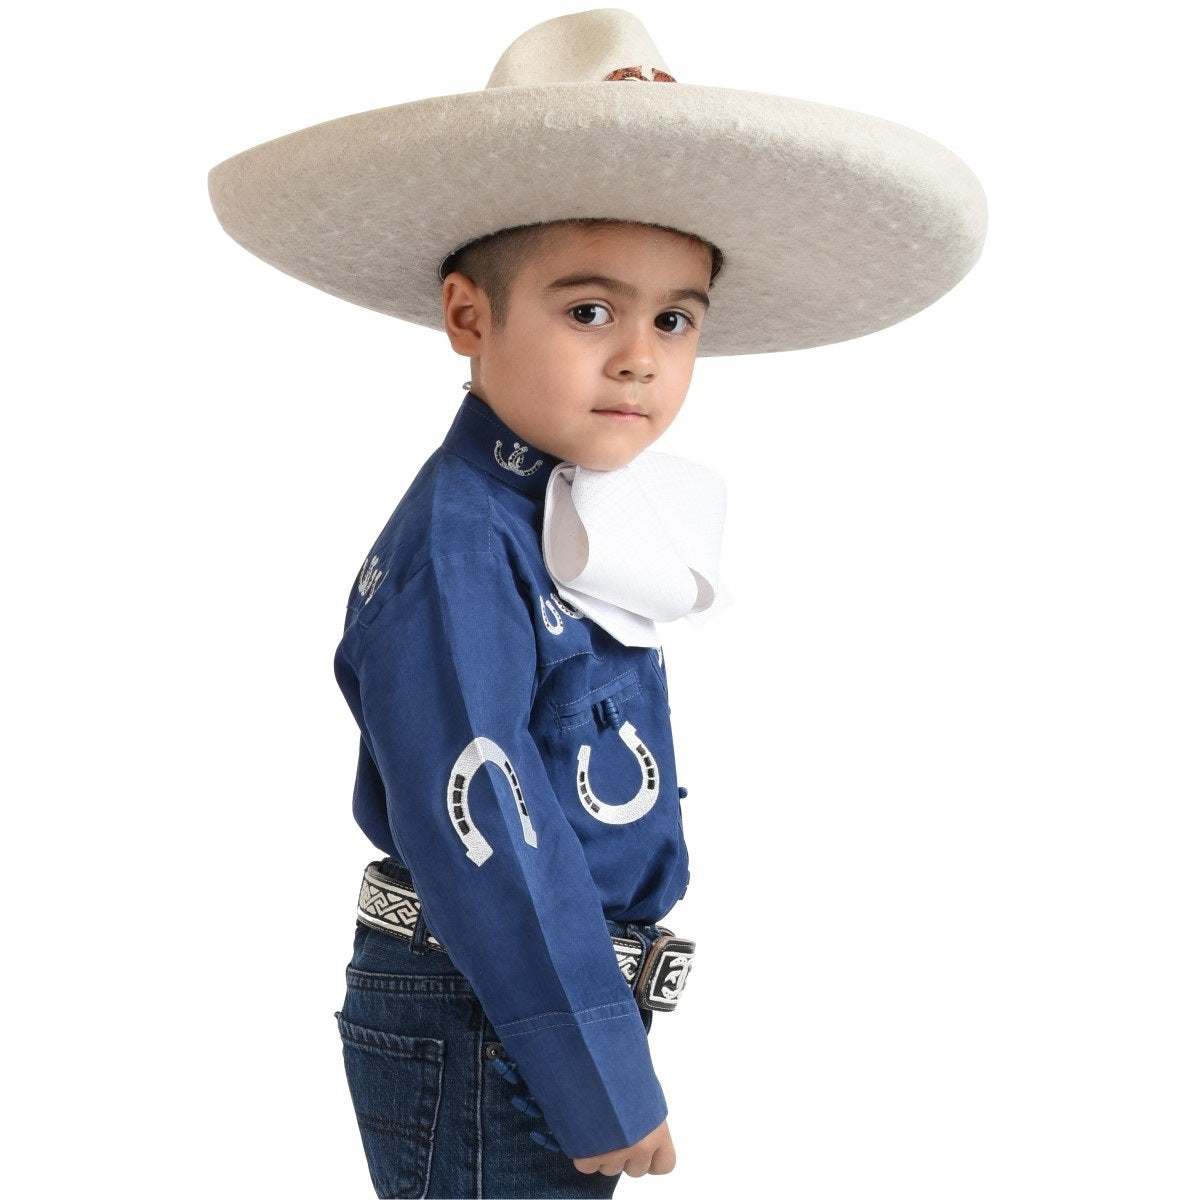 Camisa de Charro para Niño KS-TM-WD097-934 - Charro Shirt for Kids